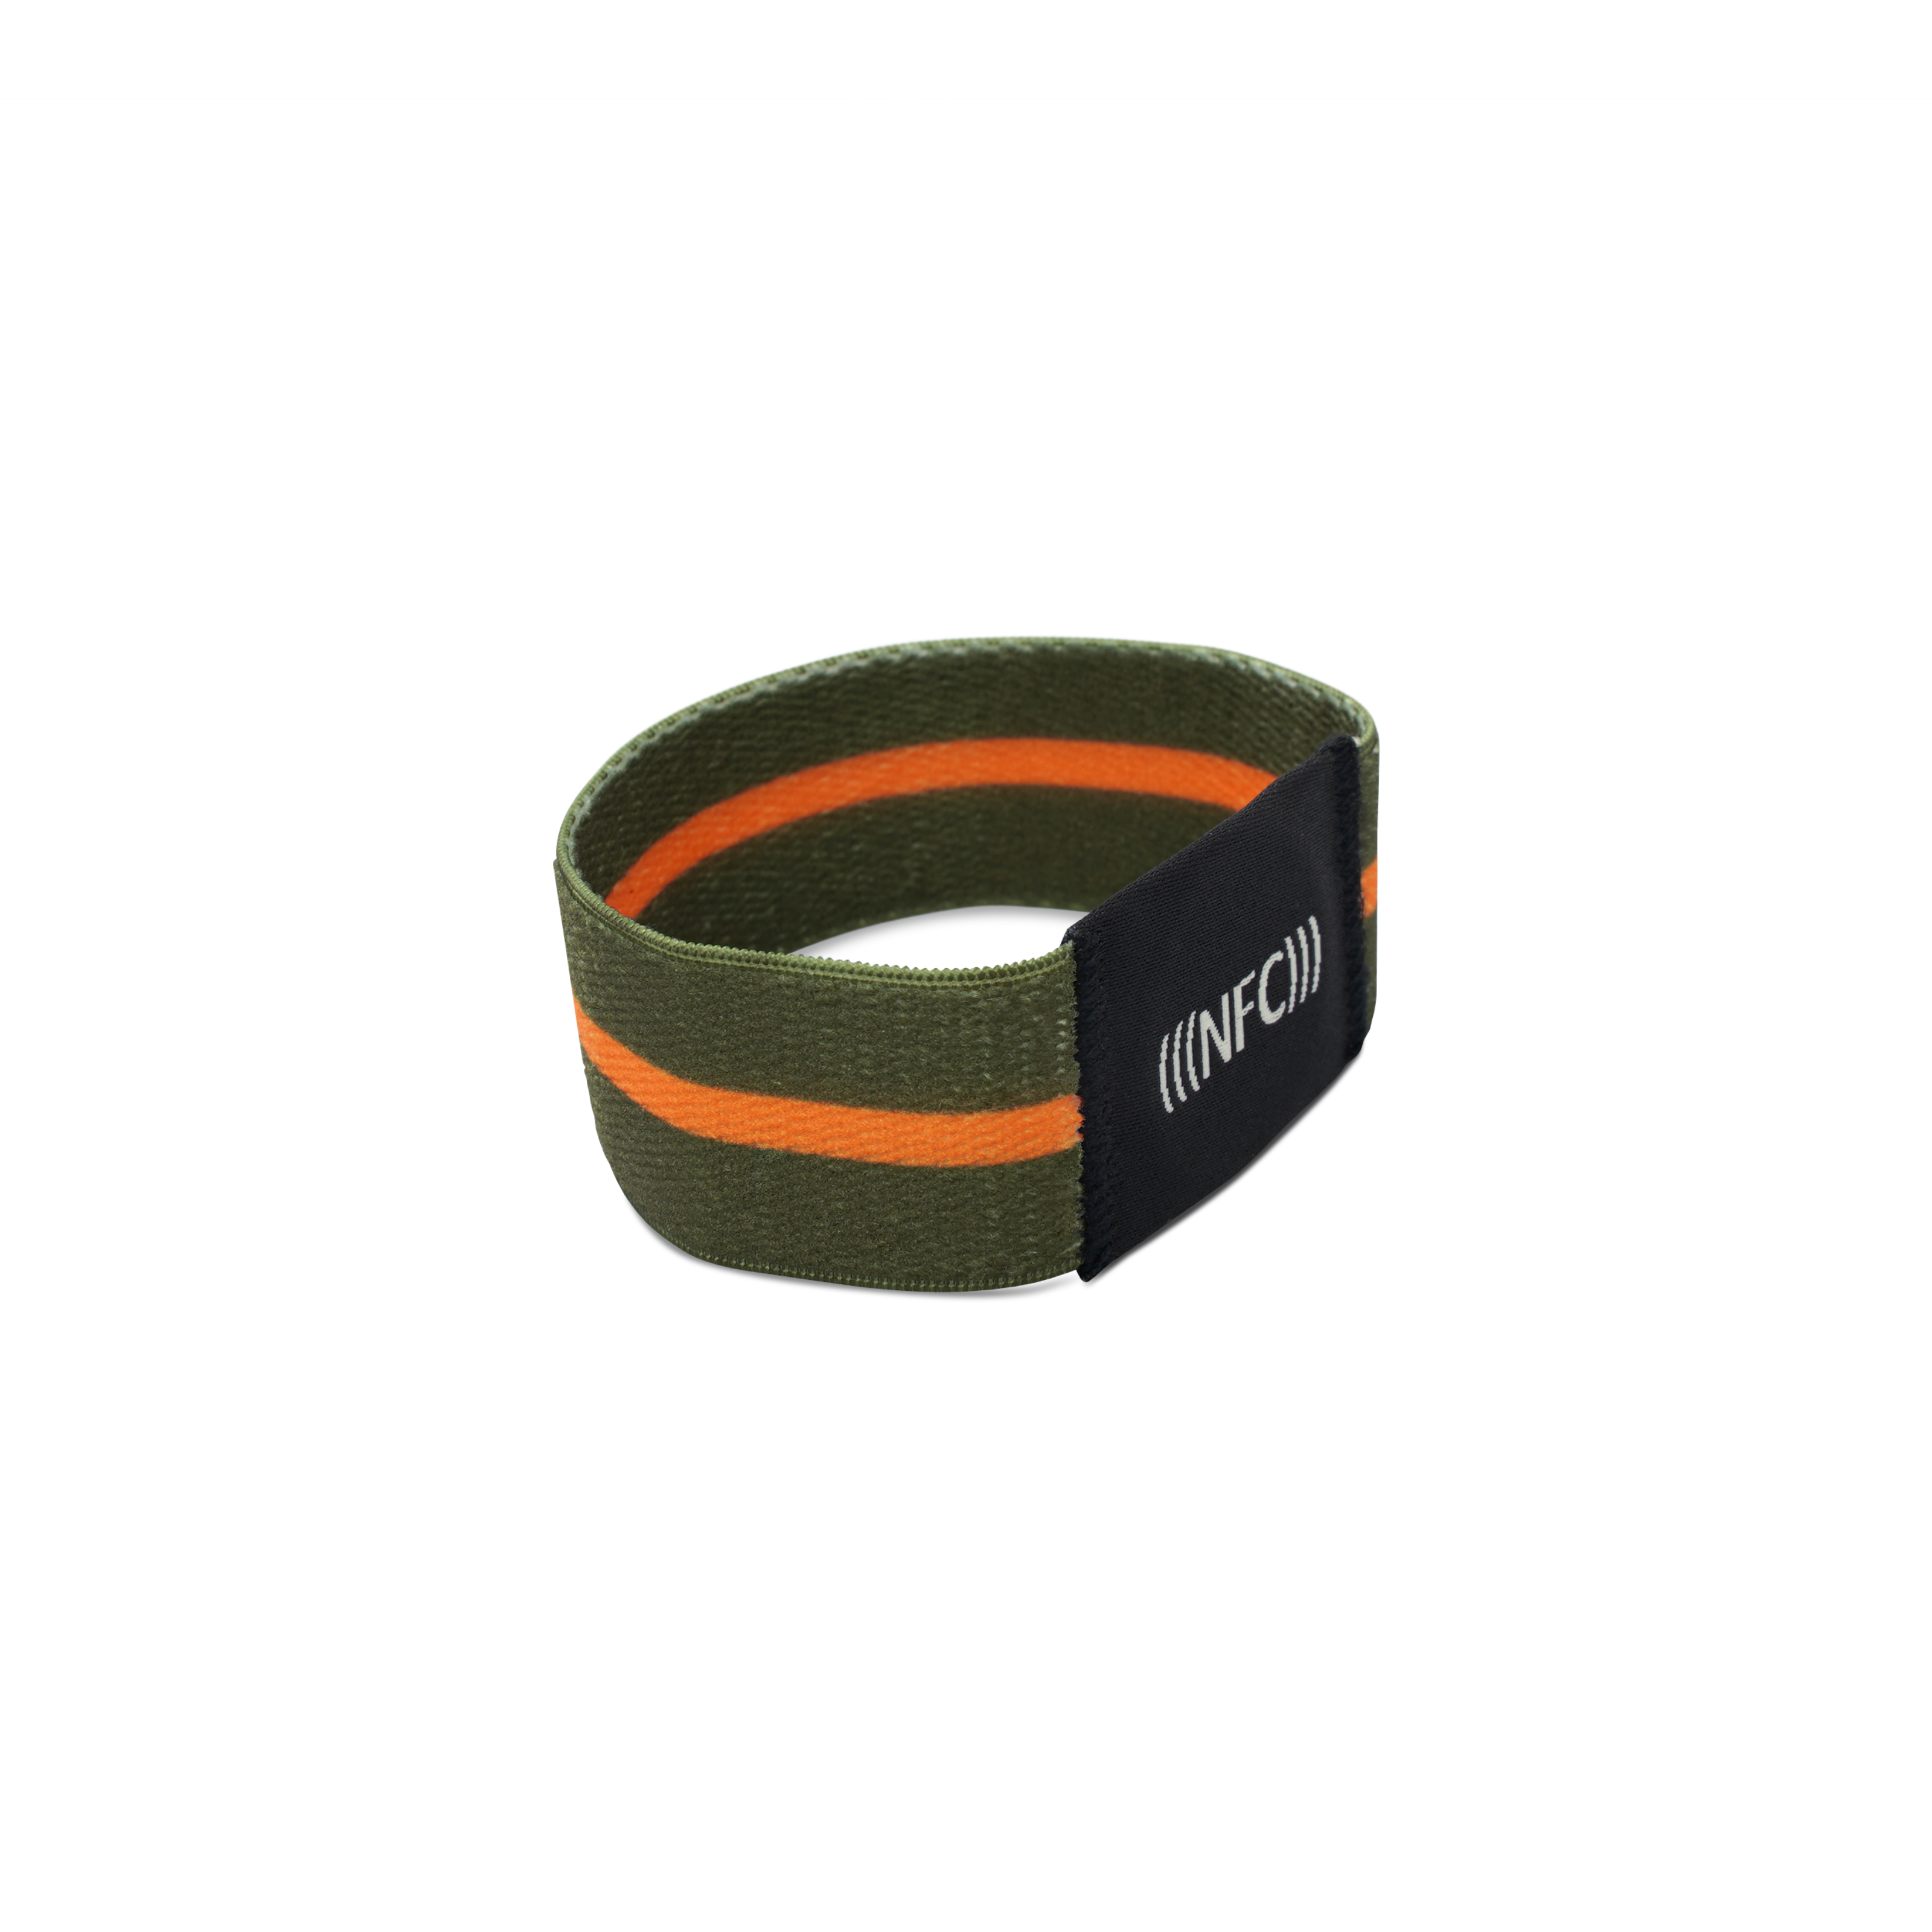  NFC Armband Stoff - 185 x 25 mm - NTAG216 - 924 Byte - grün - Größe M - Durchmesser 59 mm